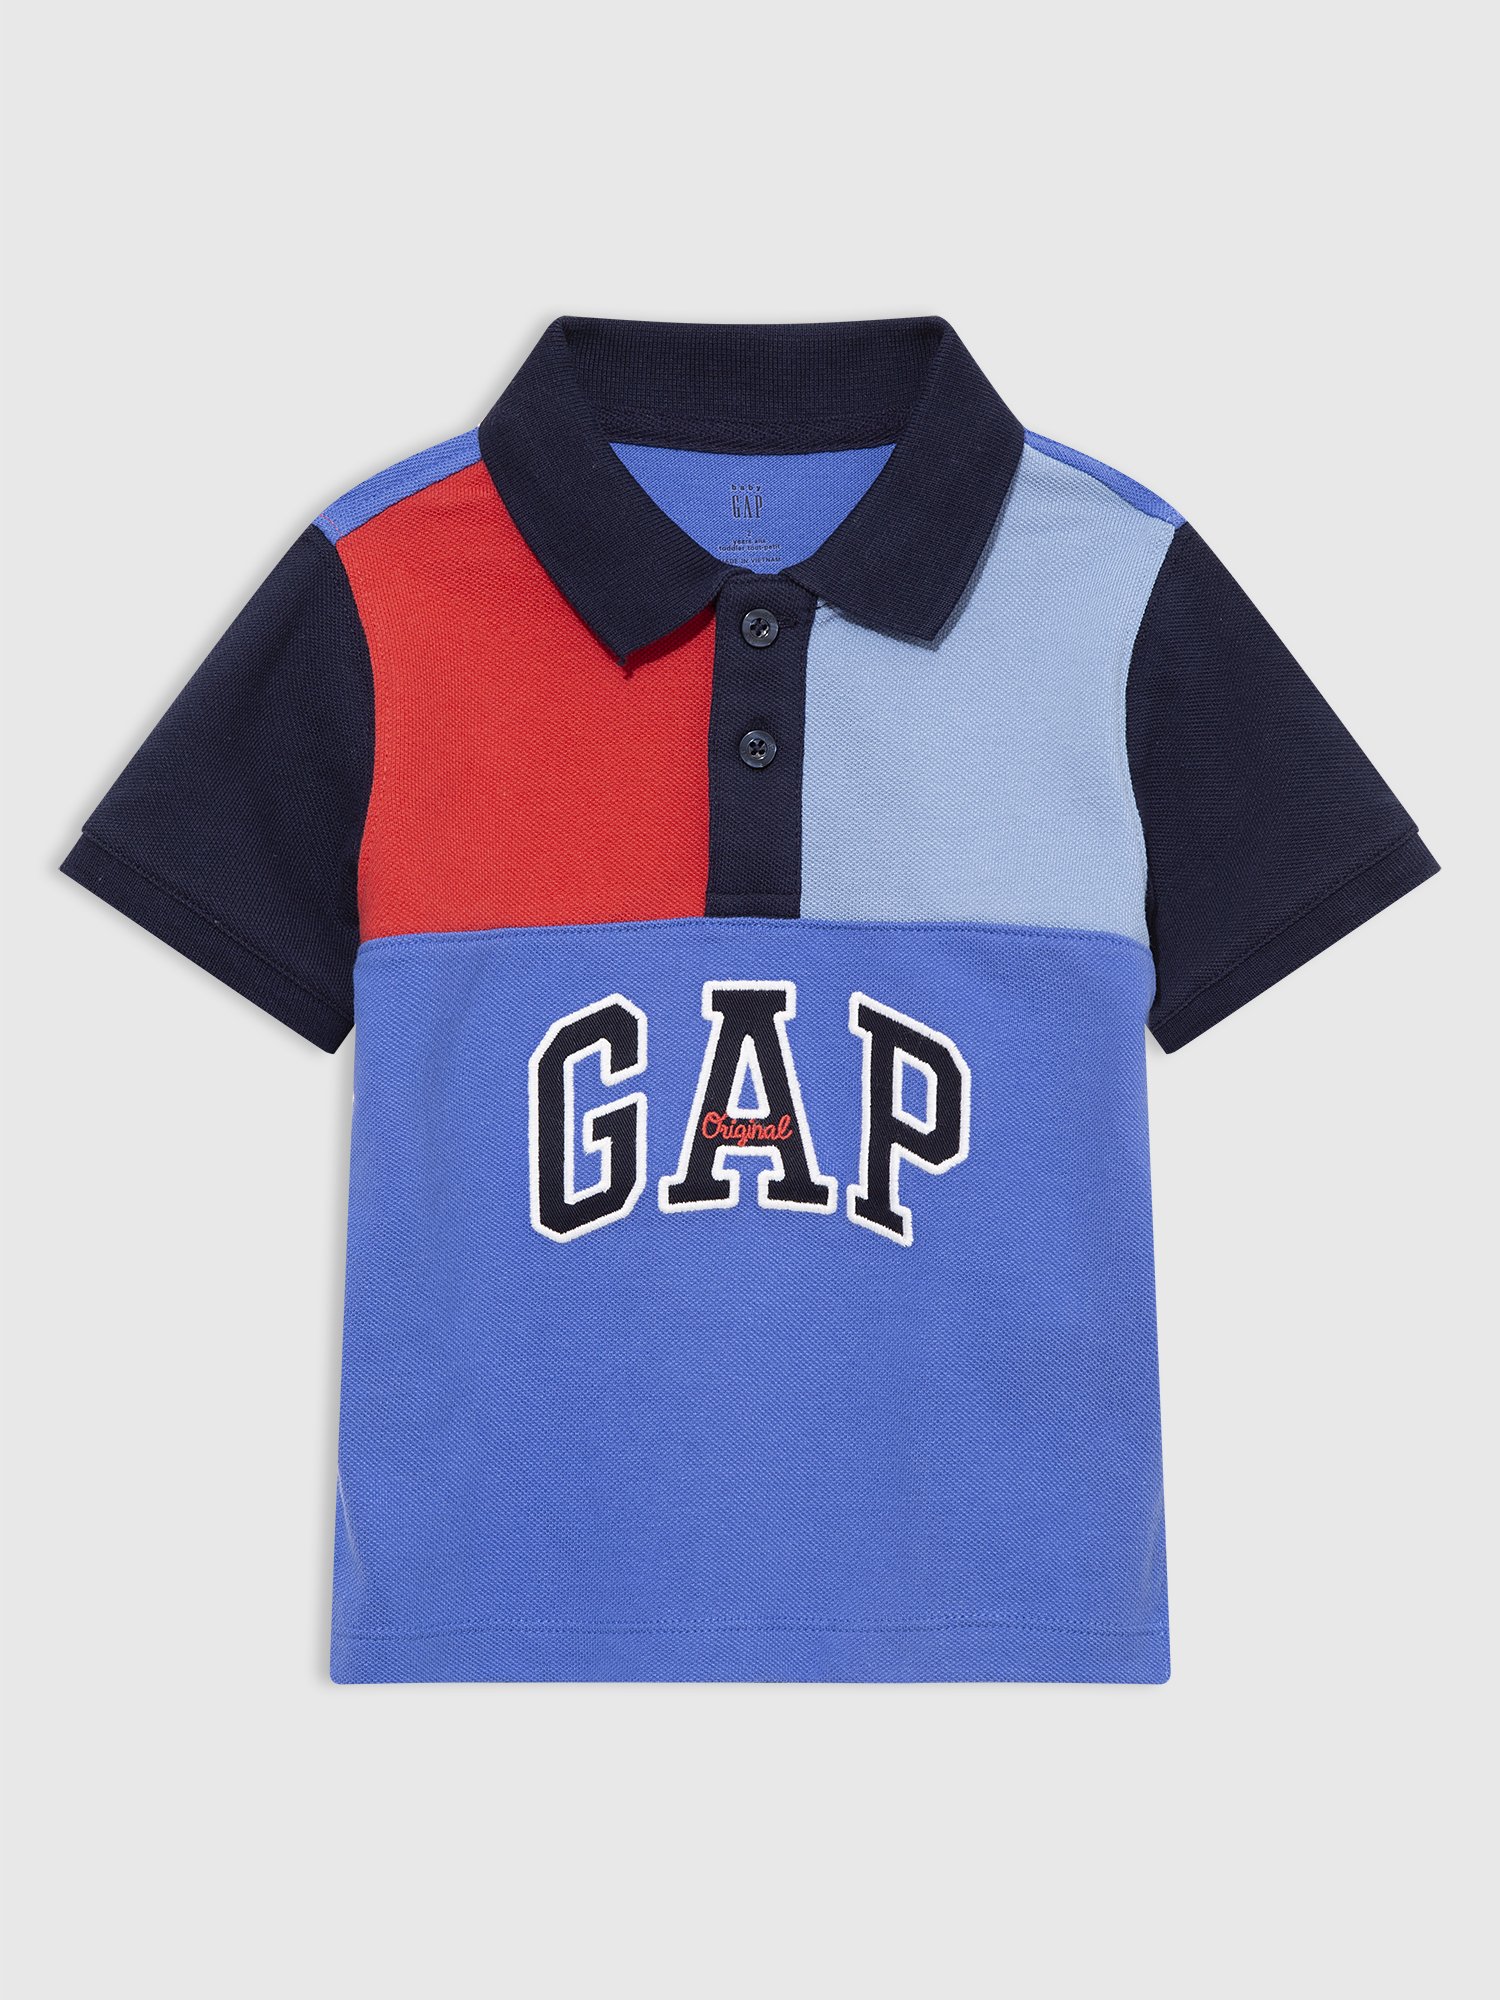 Gap Logo Polo T-Shirt product image